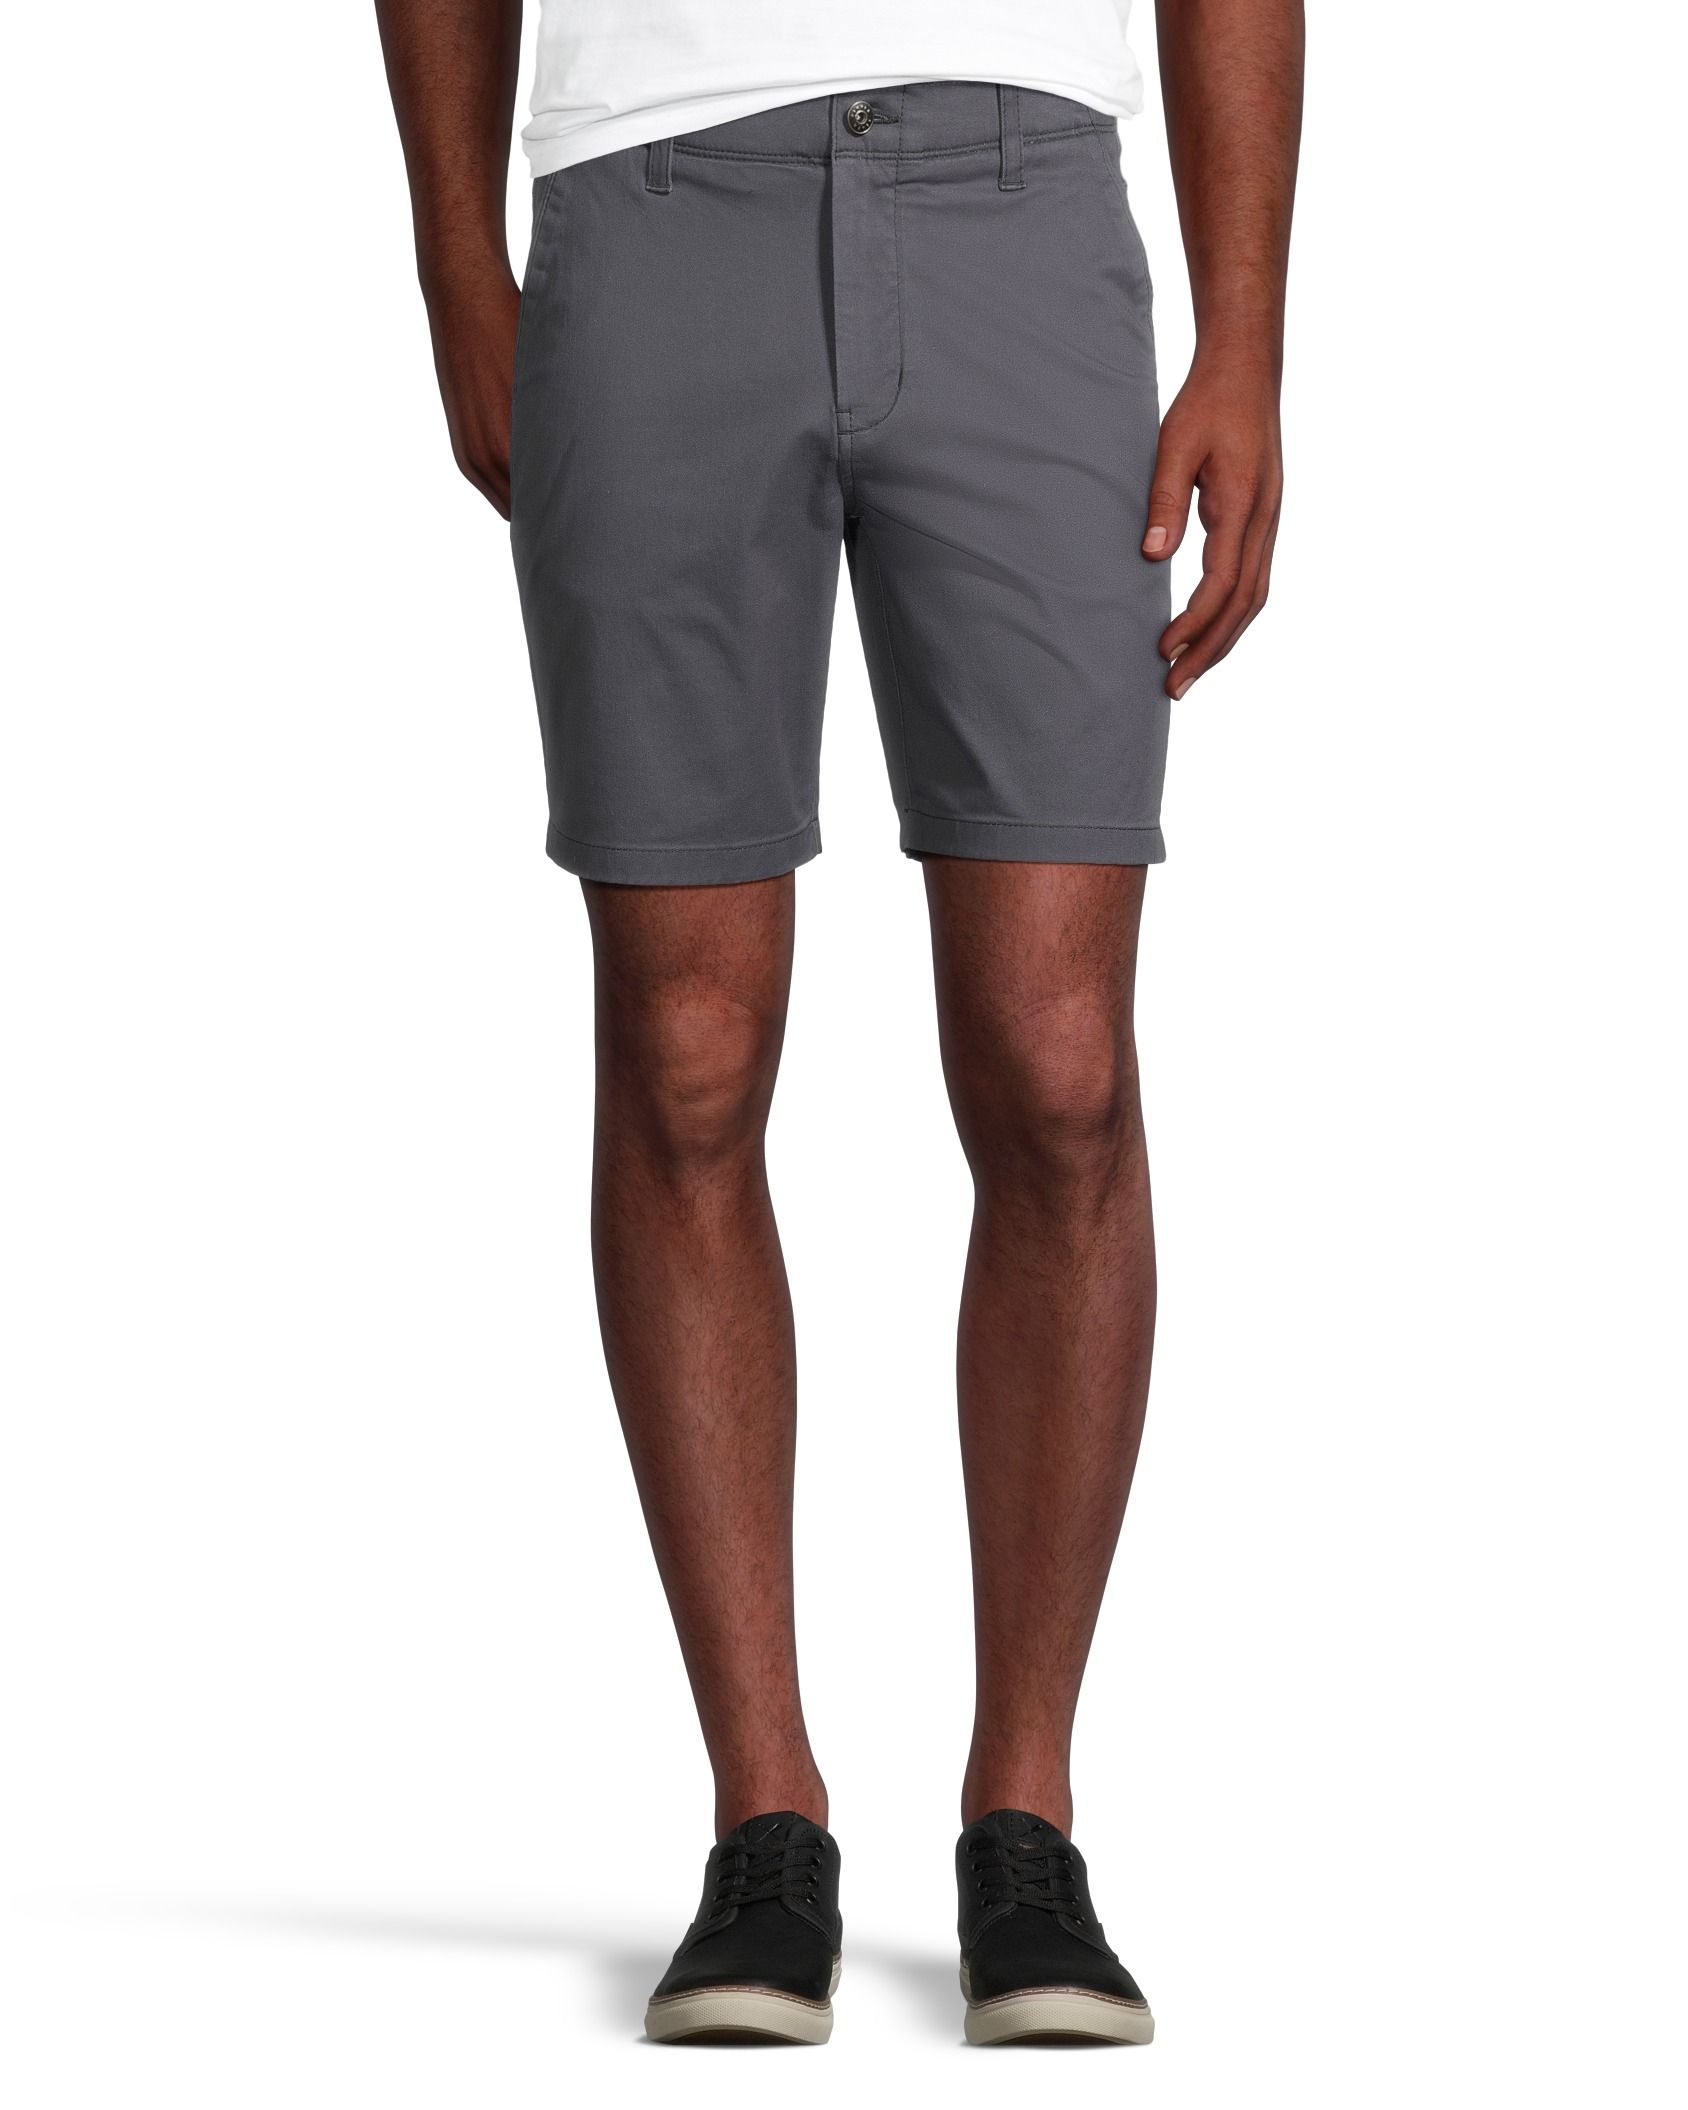 Men's Stretch 8 Inch Shorts